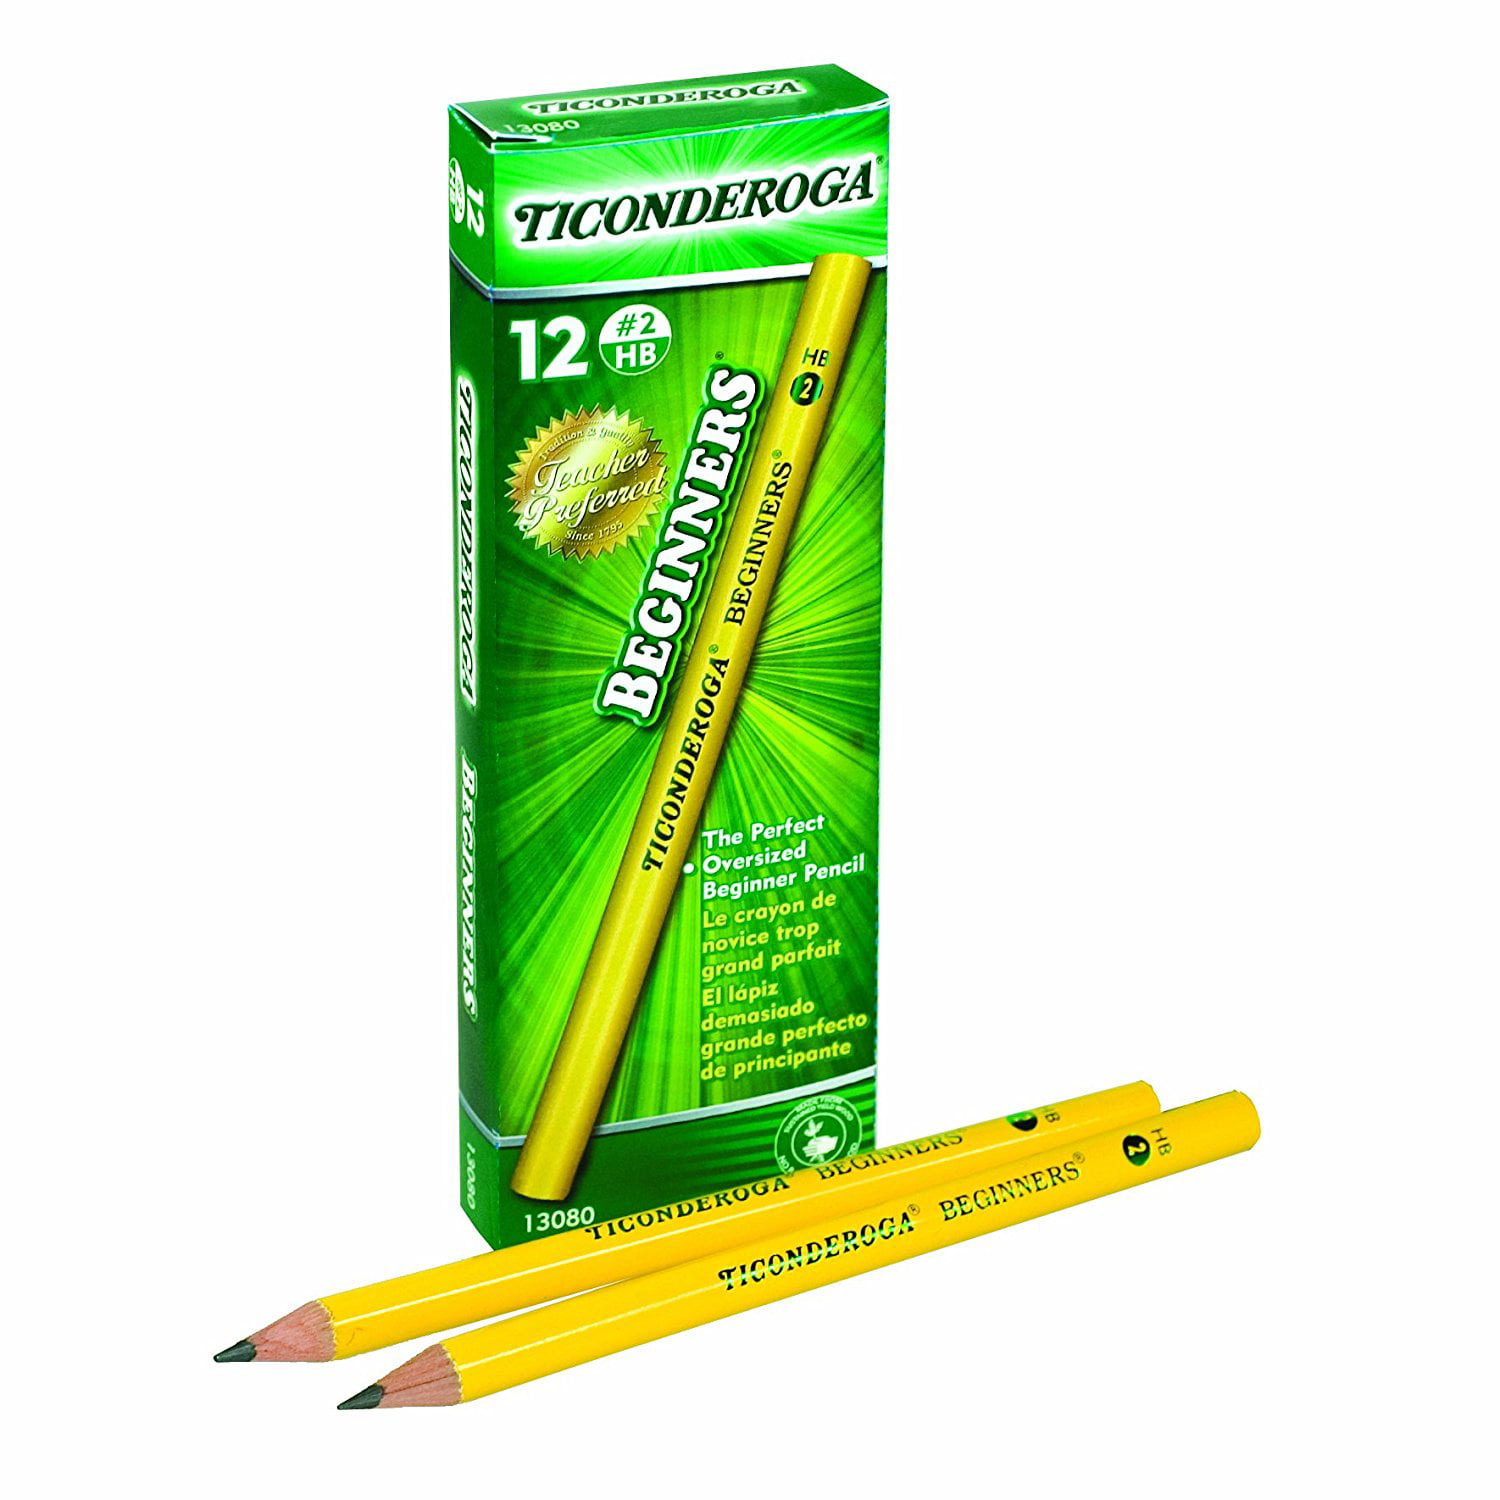 2 Pencils 6 Packs of 12 13882 NEW IN BOX Ticonderoga No